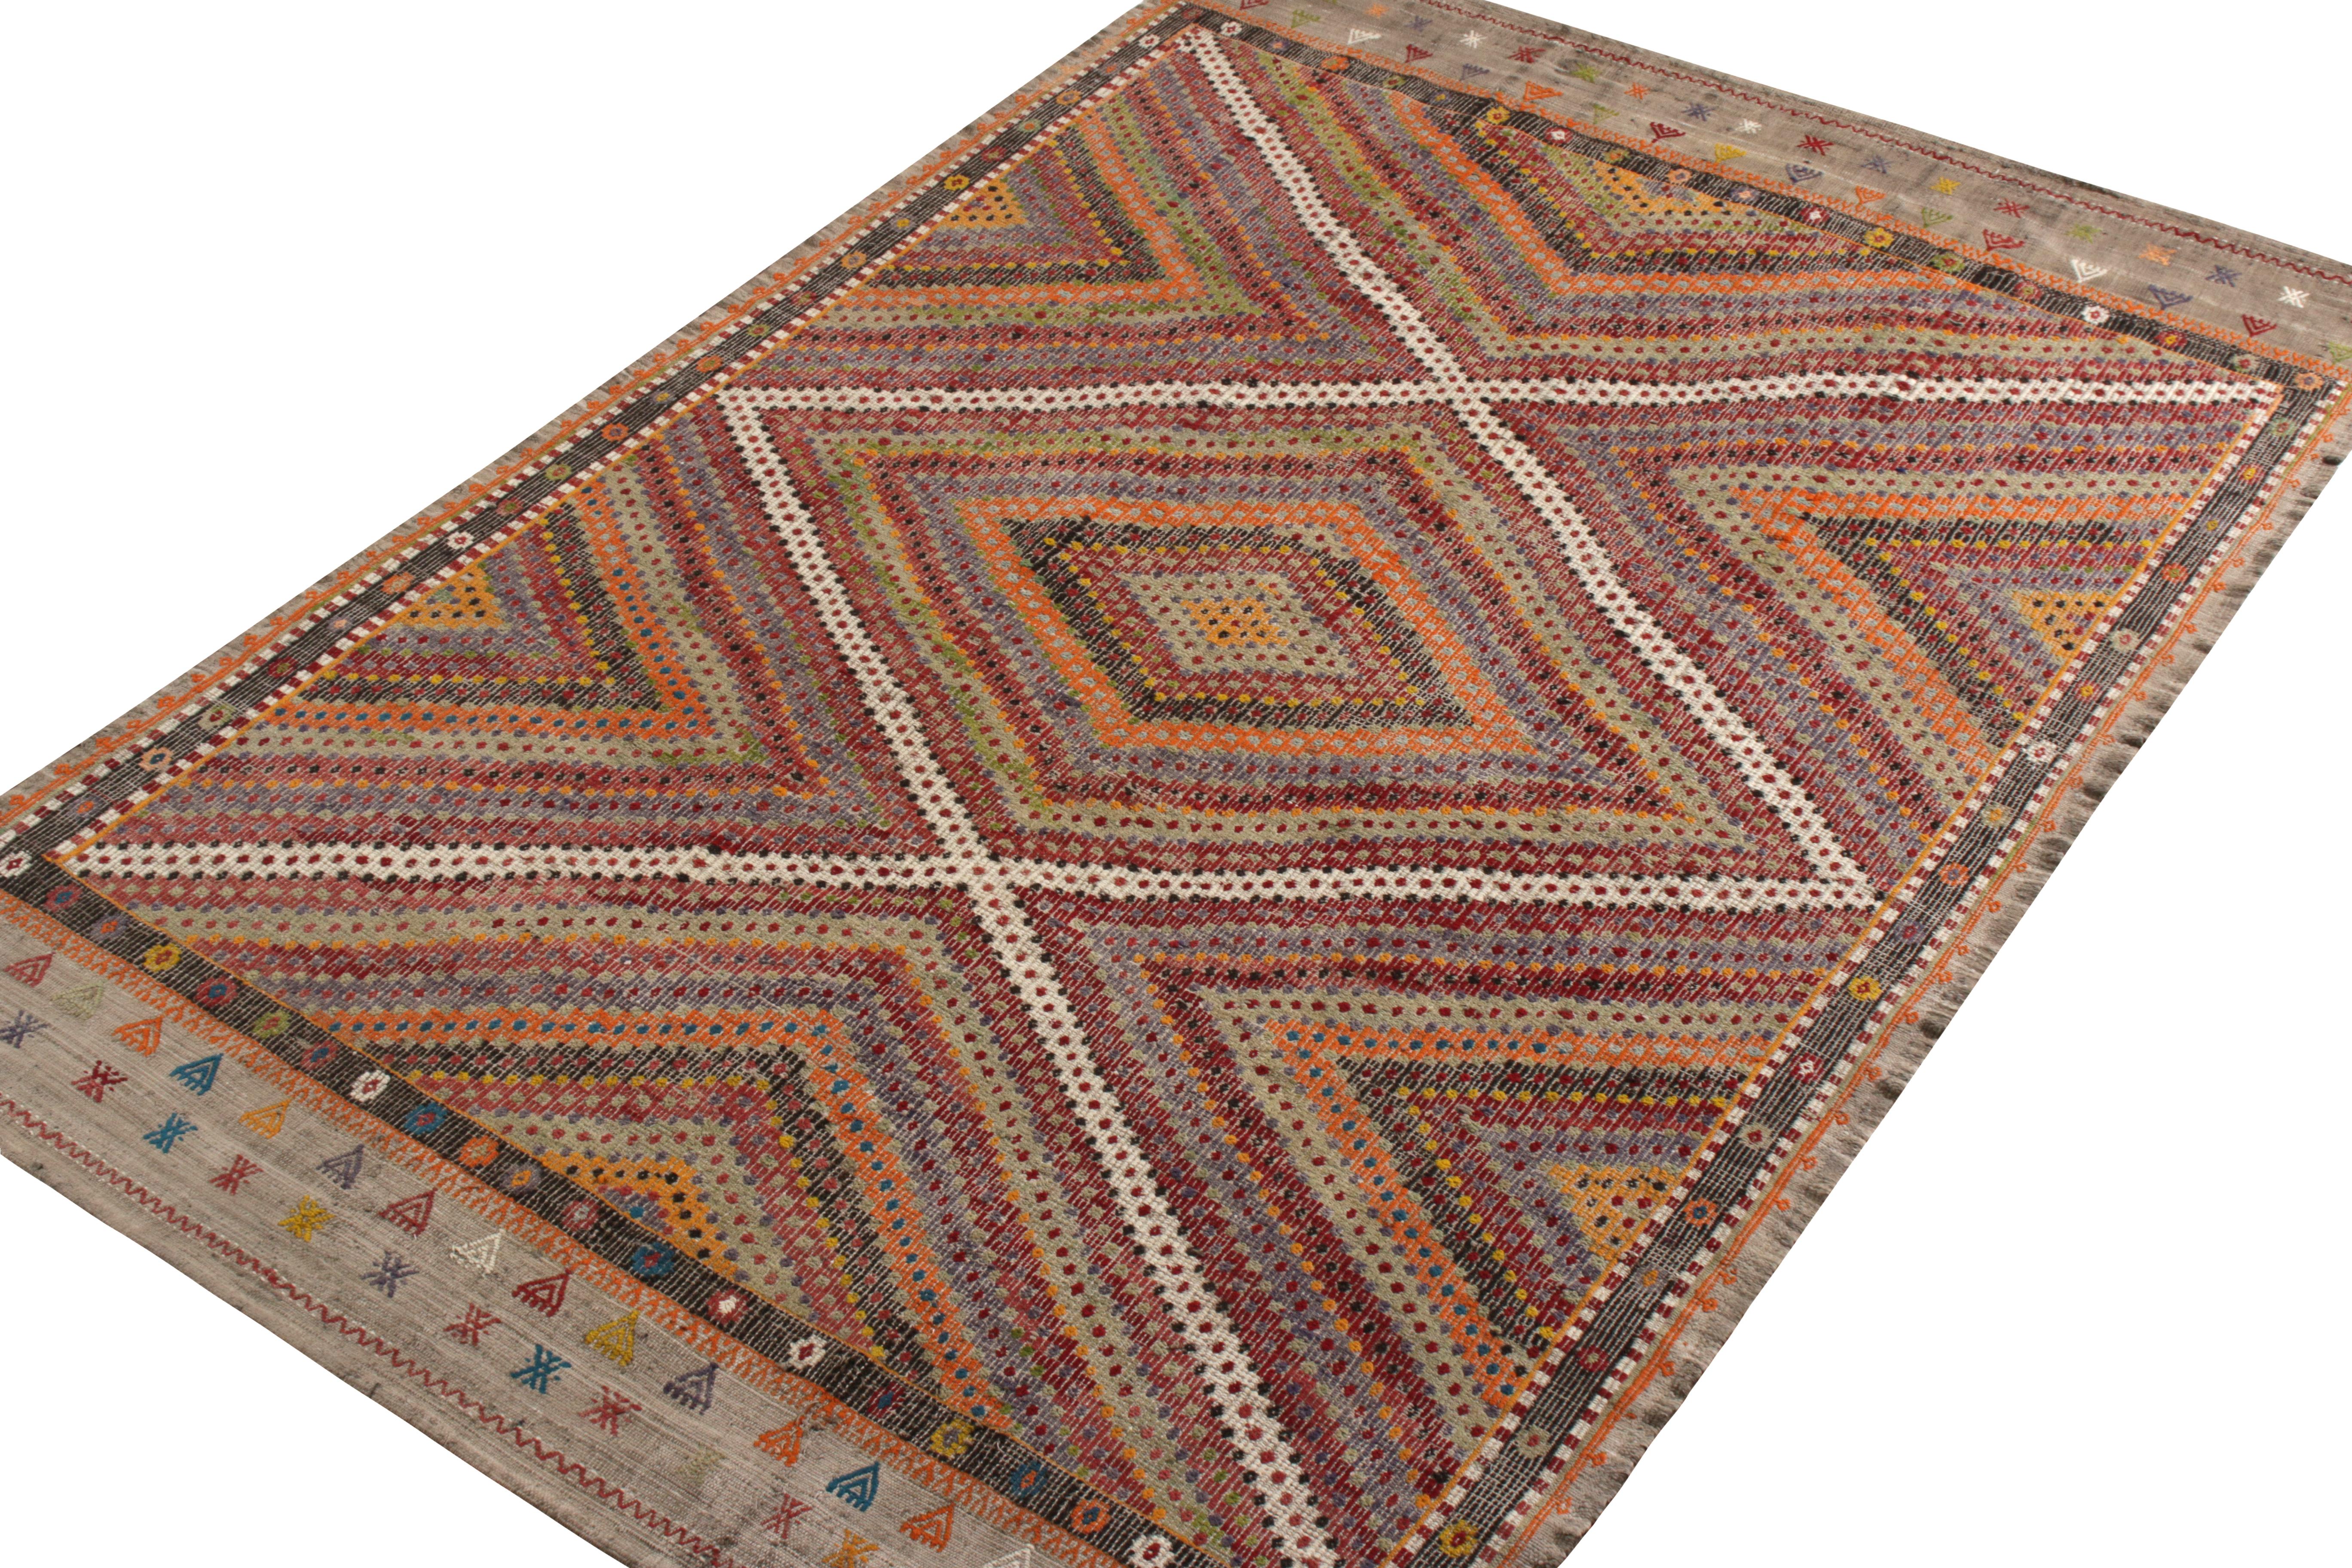 Tribal Vintage Kilim Rug in High-Low Multicolor Geometric Pattern by Rug & Kilim For Sale